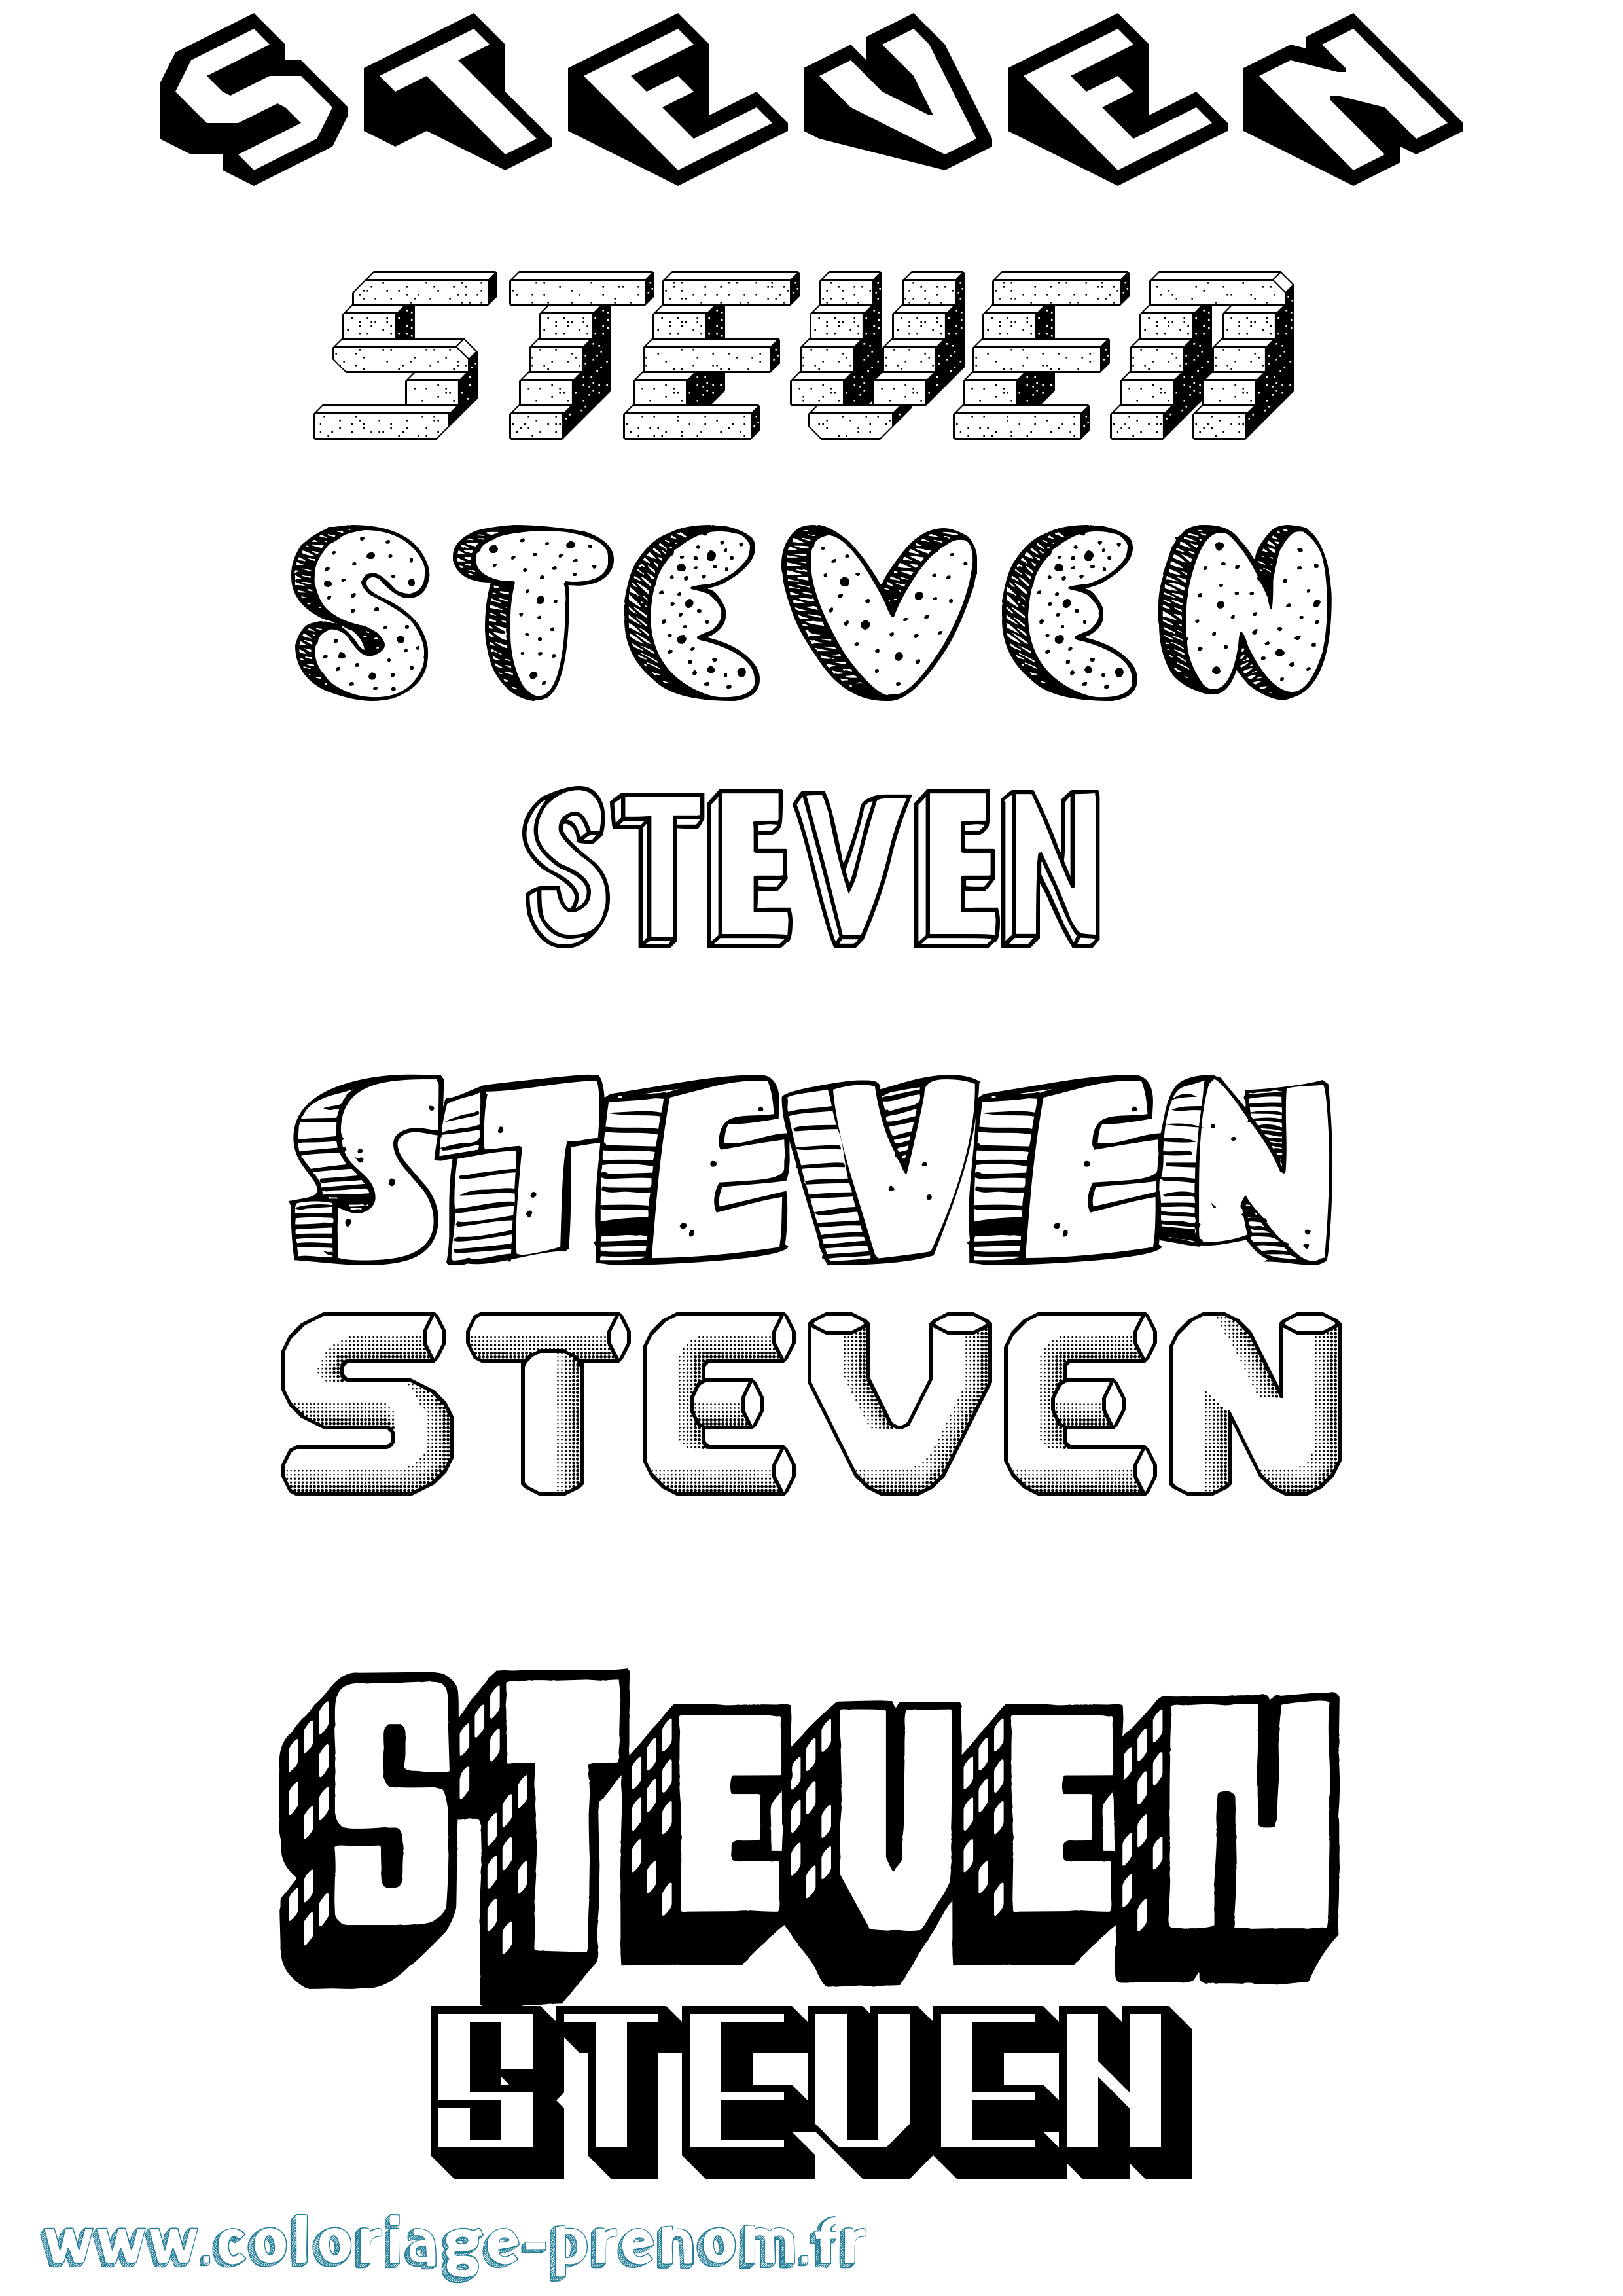 Coloriage prénom Steven